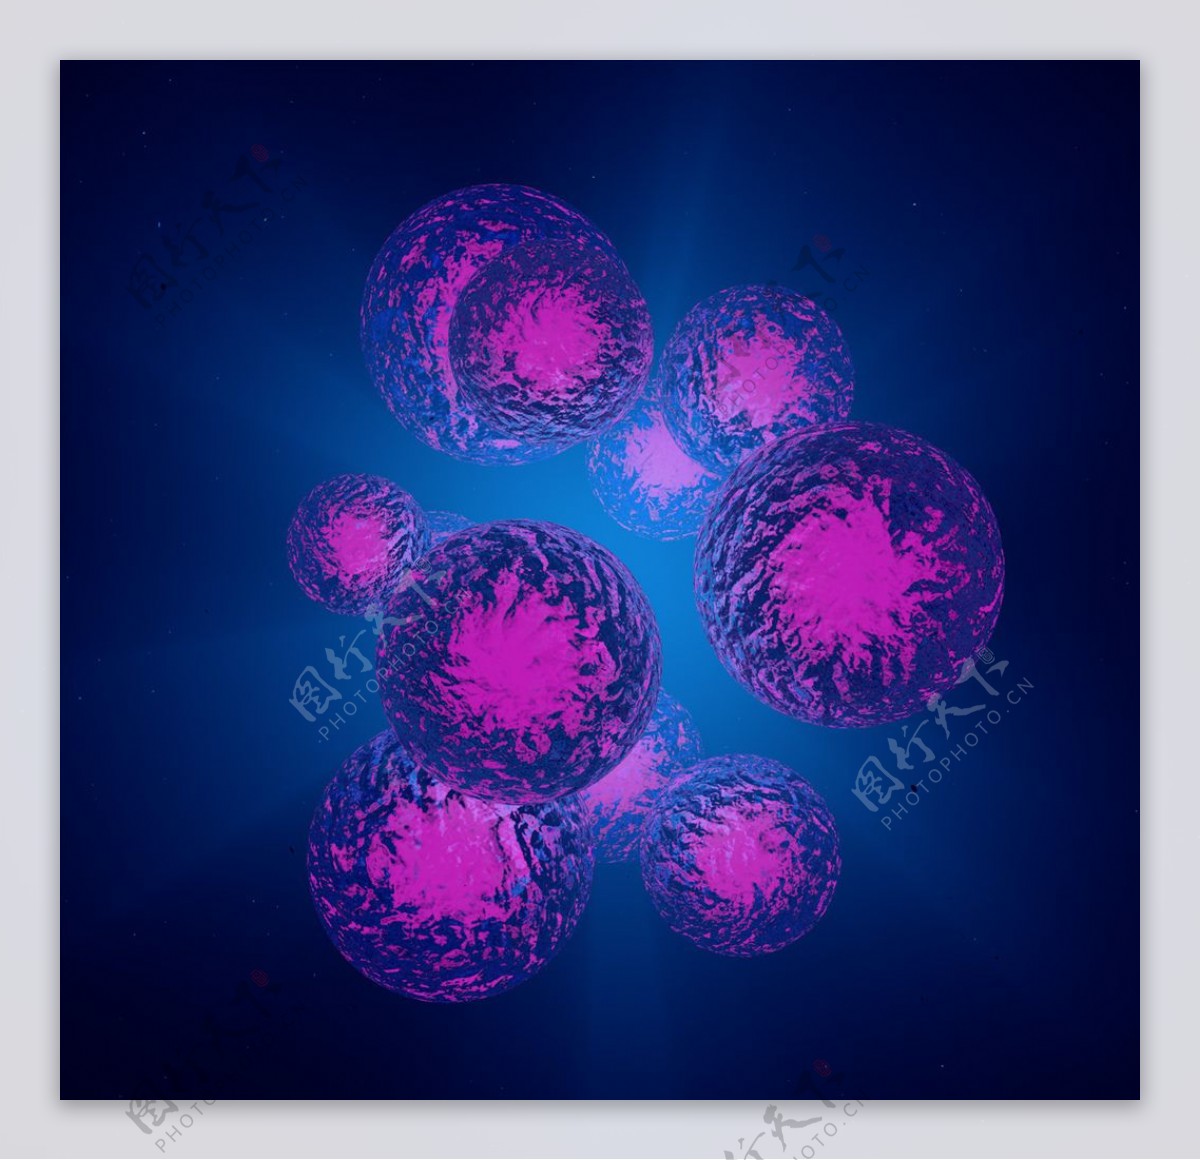 C4D模型病毒细胞图片